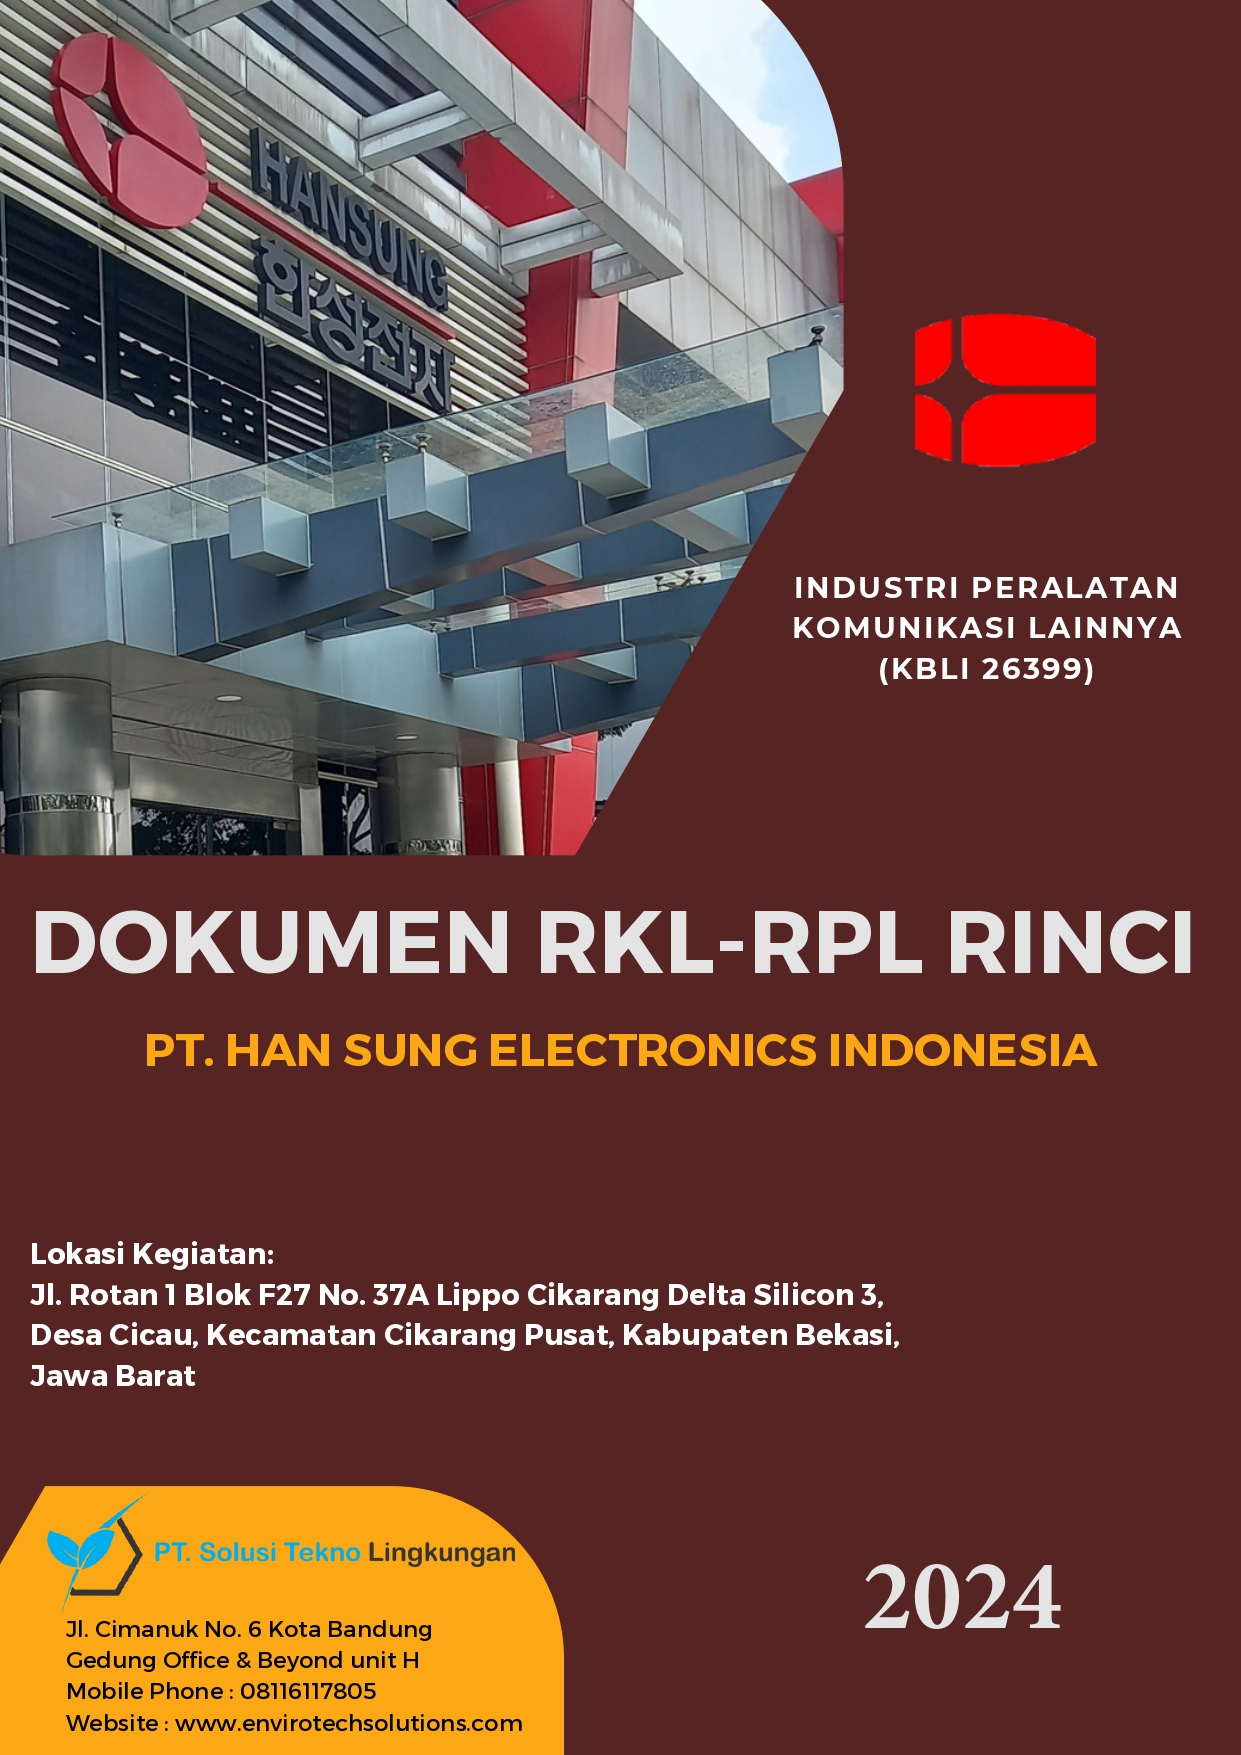 RKL-RPL Rinci PT Han Sung Electronics Indonesia